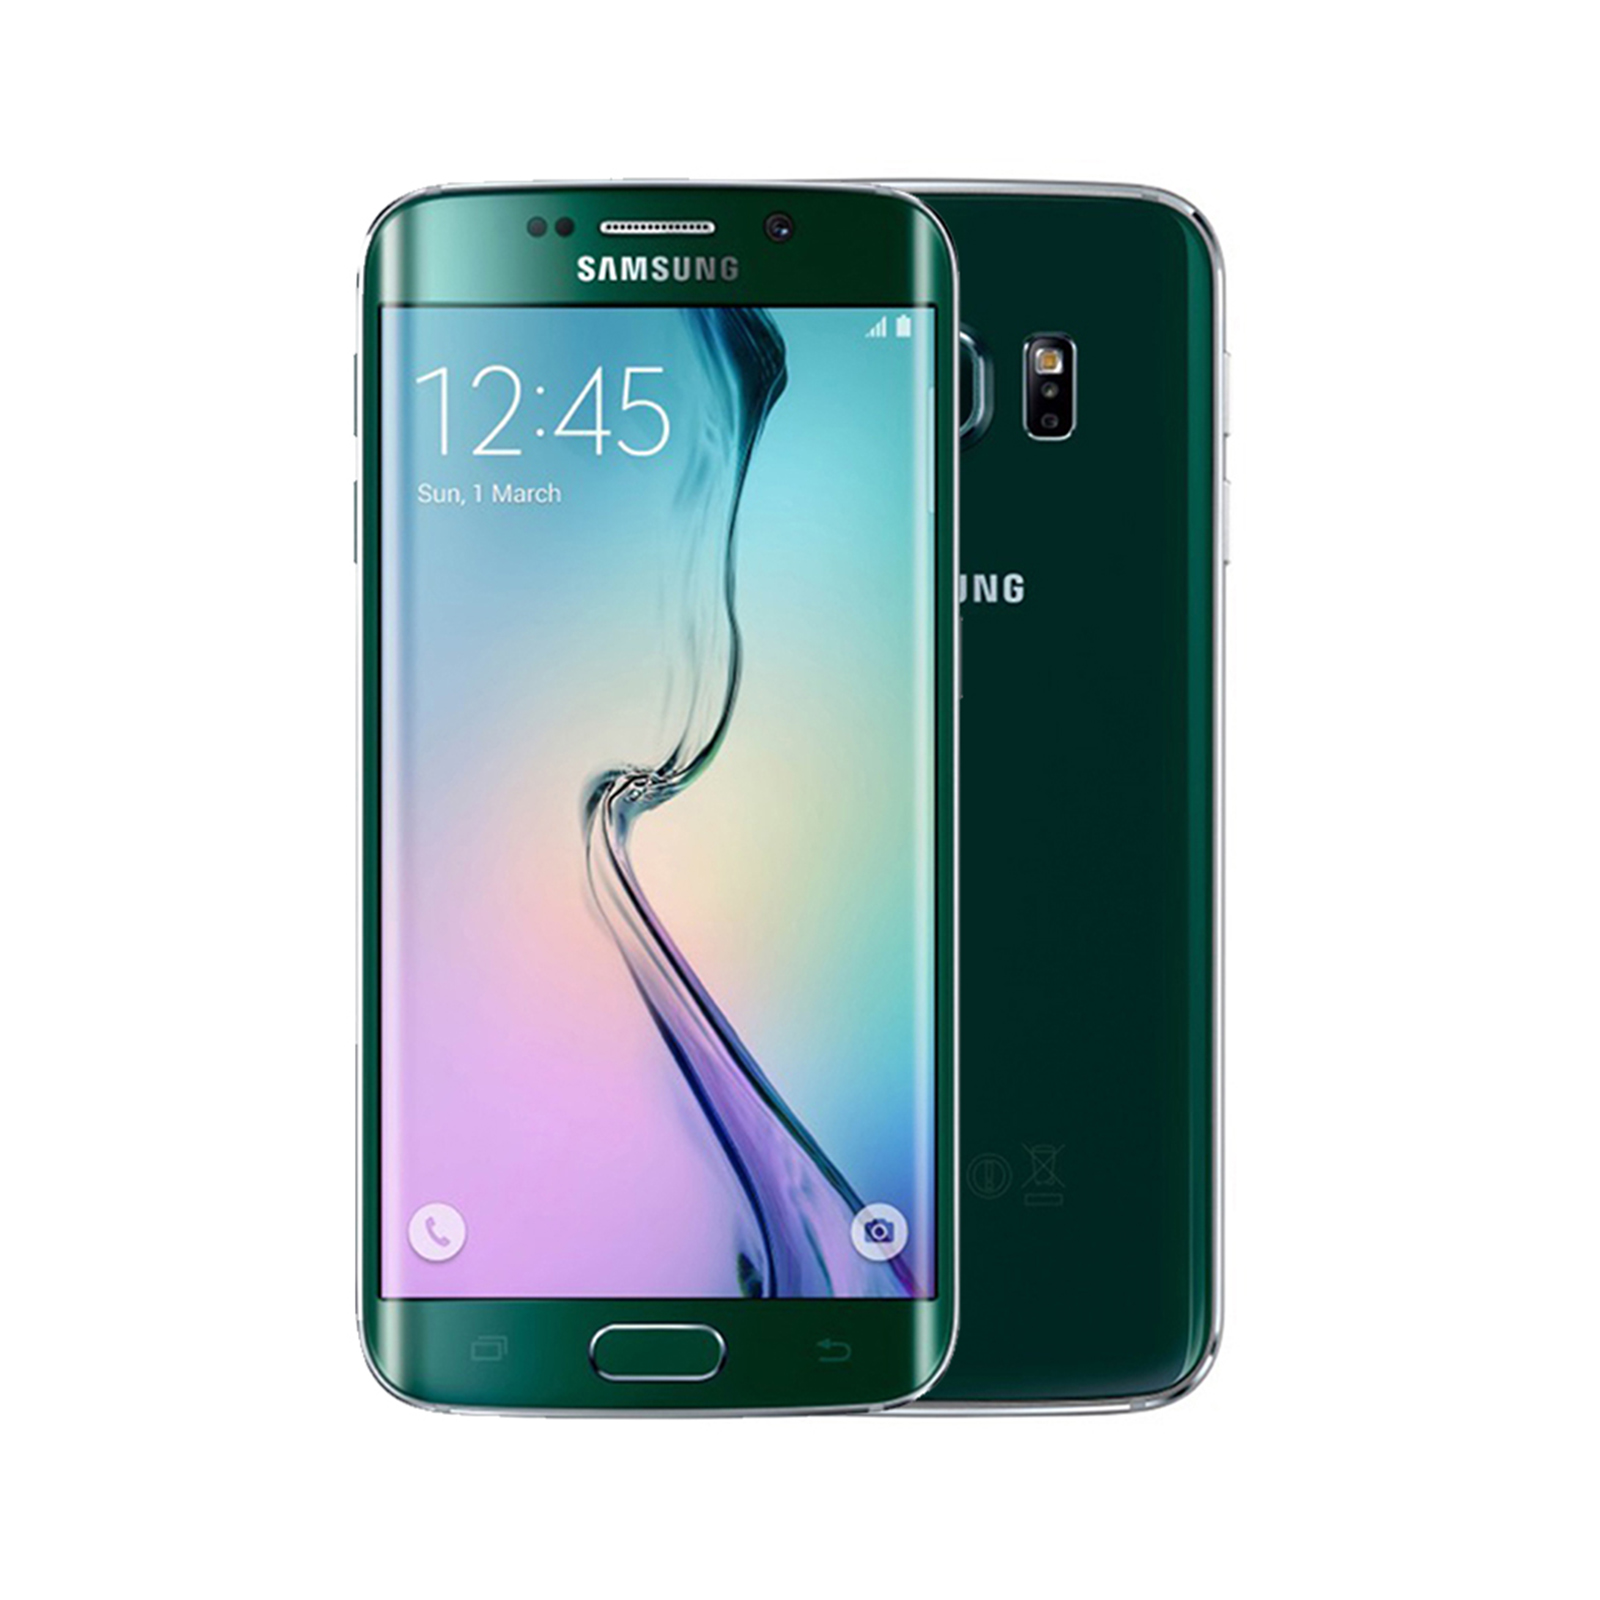 Samsung Galaxy S6 edge [32GB] [Green] [Very Good]